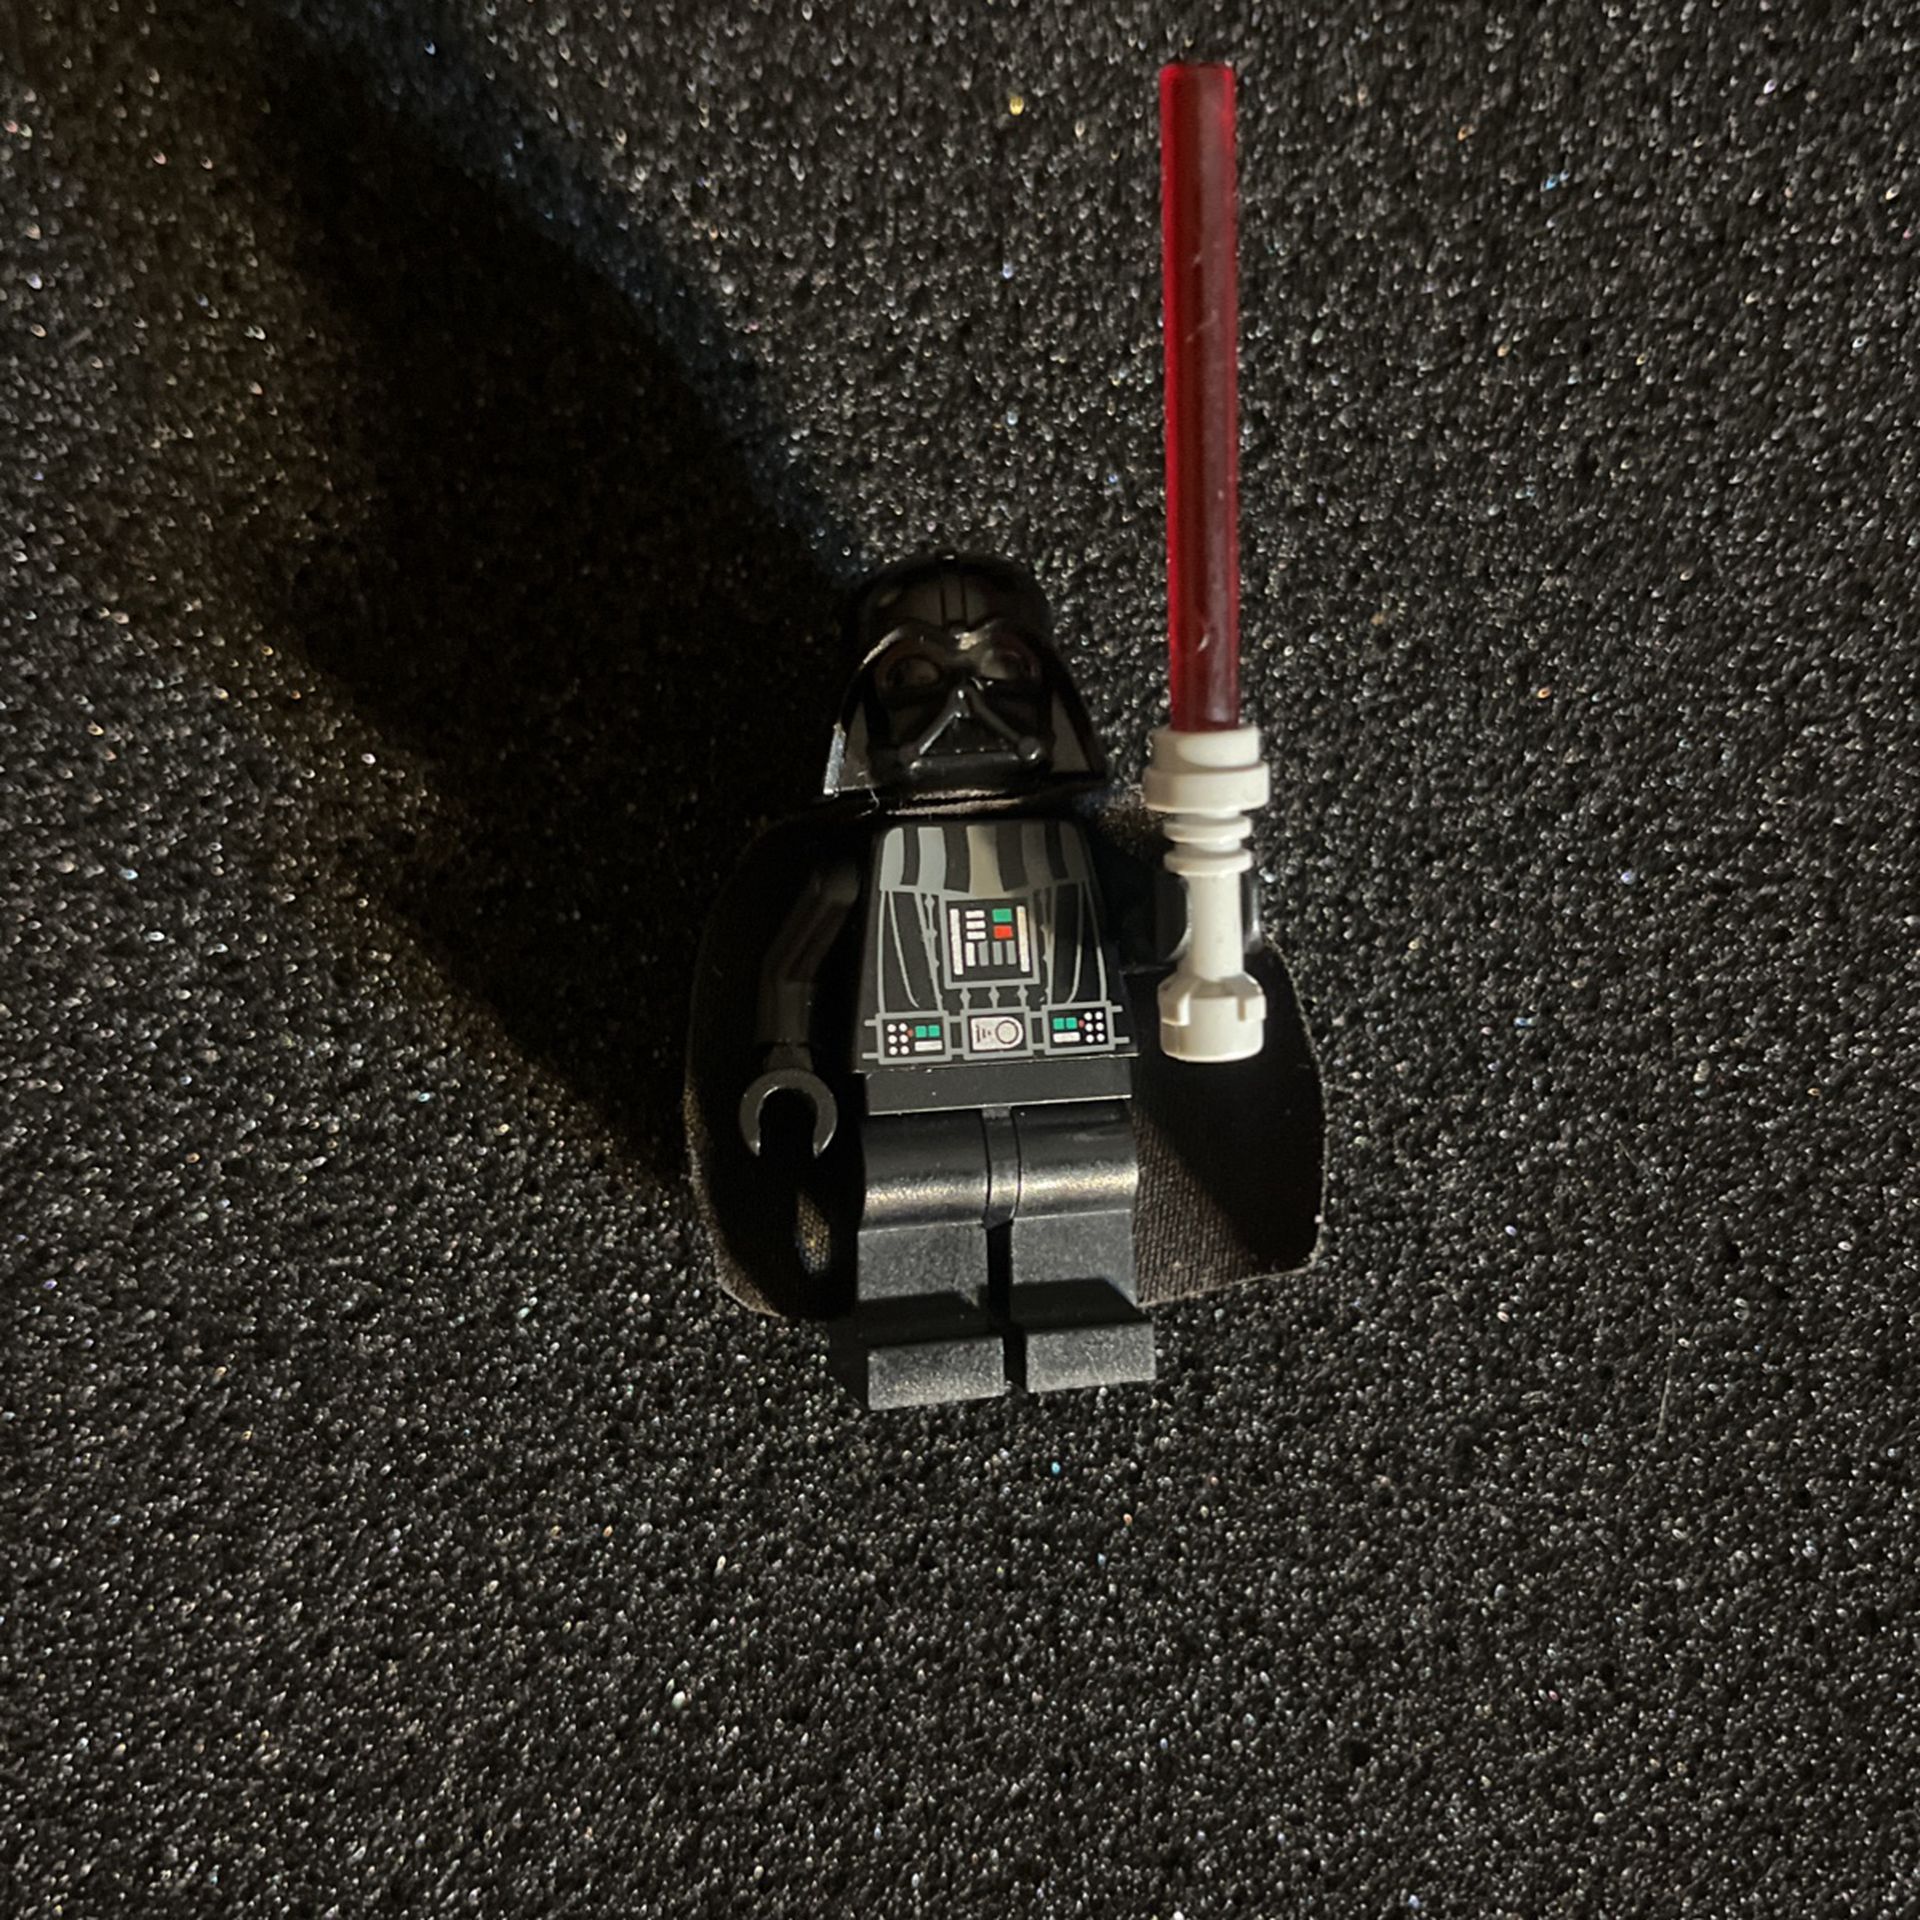 2009 Darth Vader Lego Figure